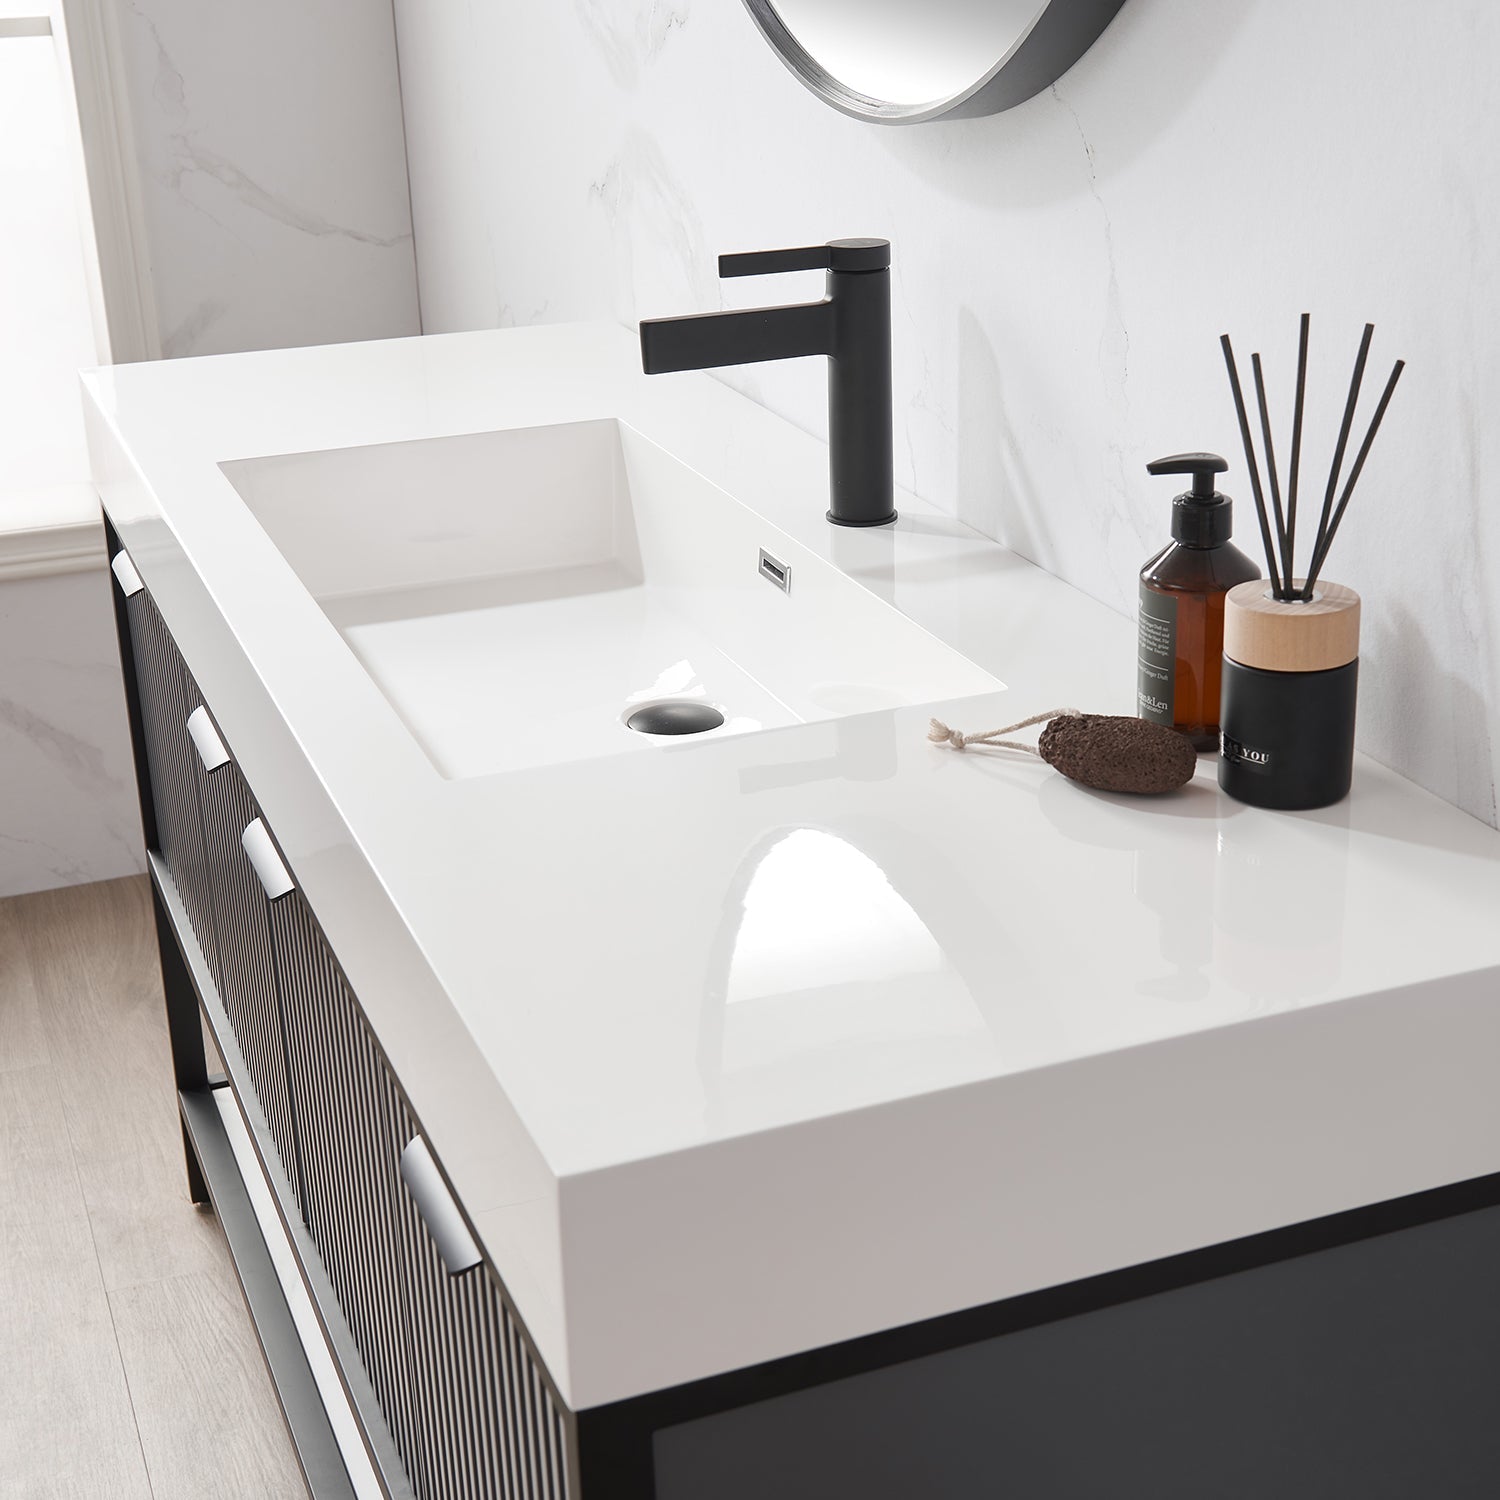 Vinnova Design Marcilla 60" Single Sink Bath Vanity in Grey with One Piece Composite Stone Sink Top - New Star Living